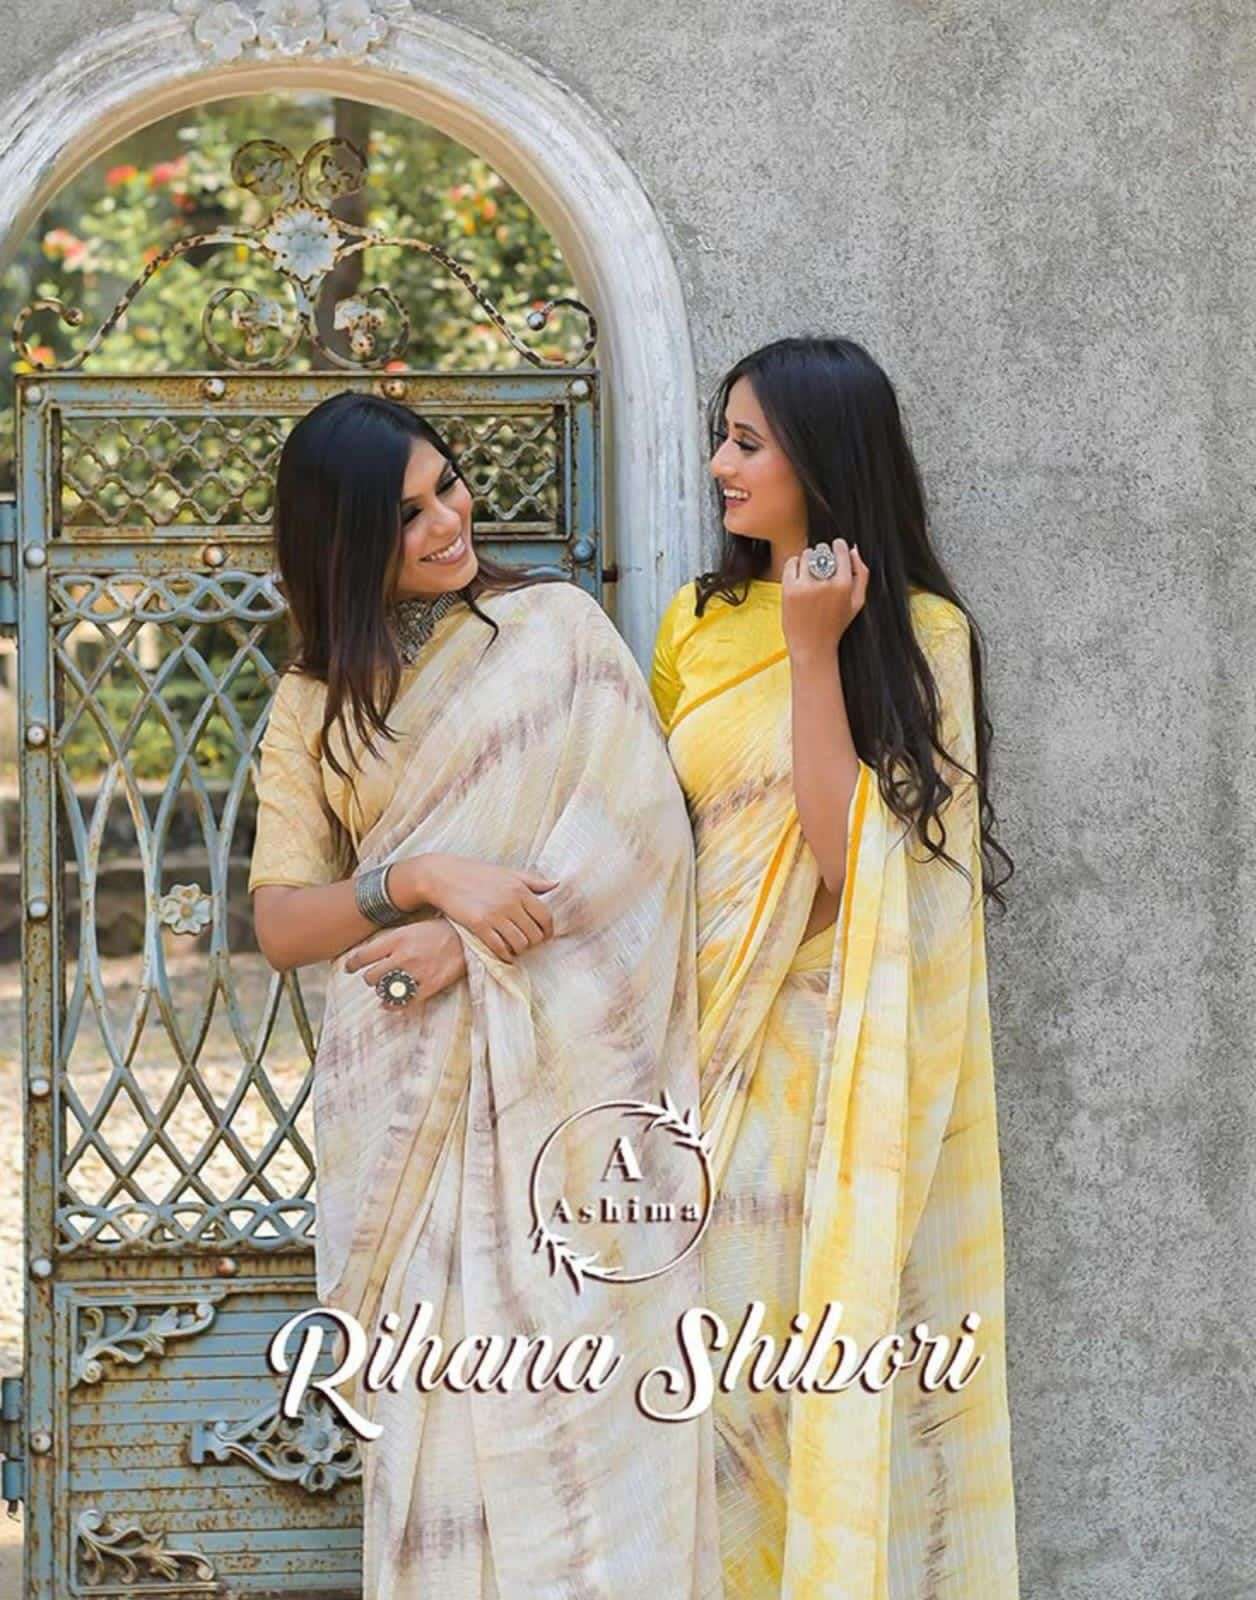 ashima present rihana shibori weightless beautiful fancy sarees